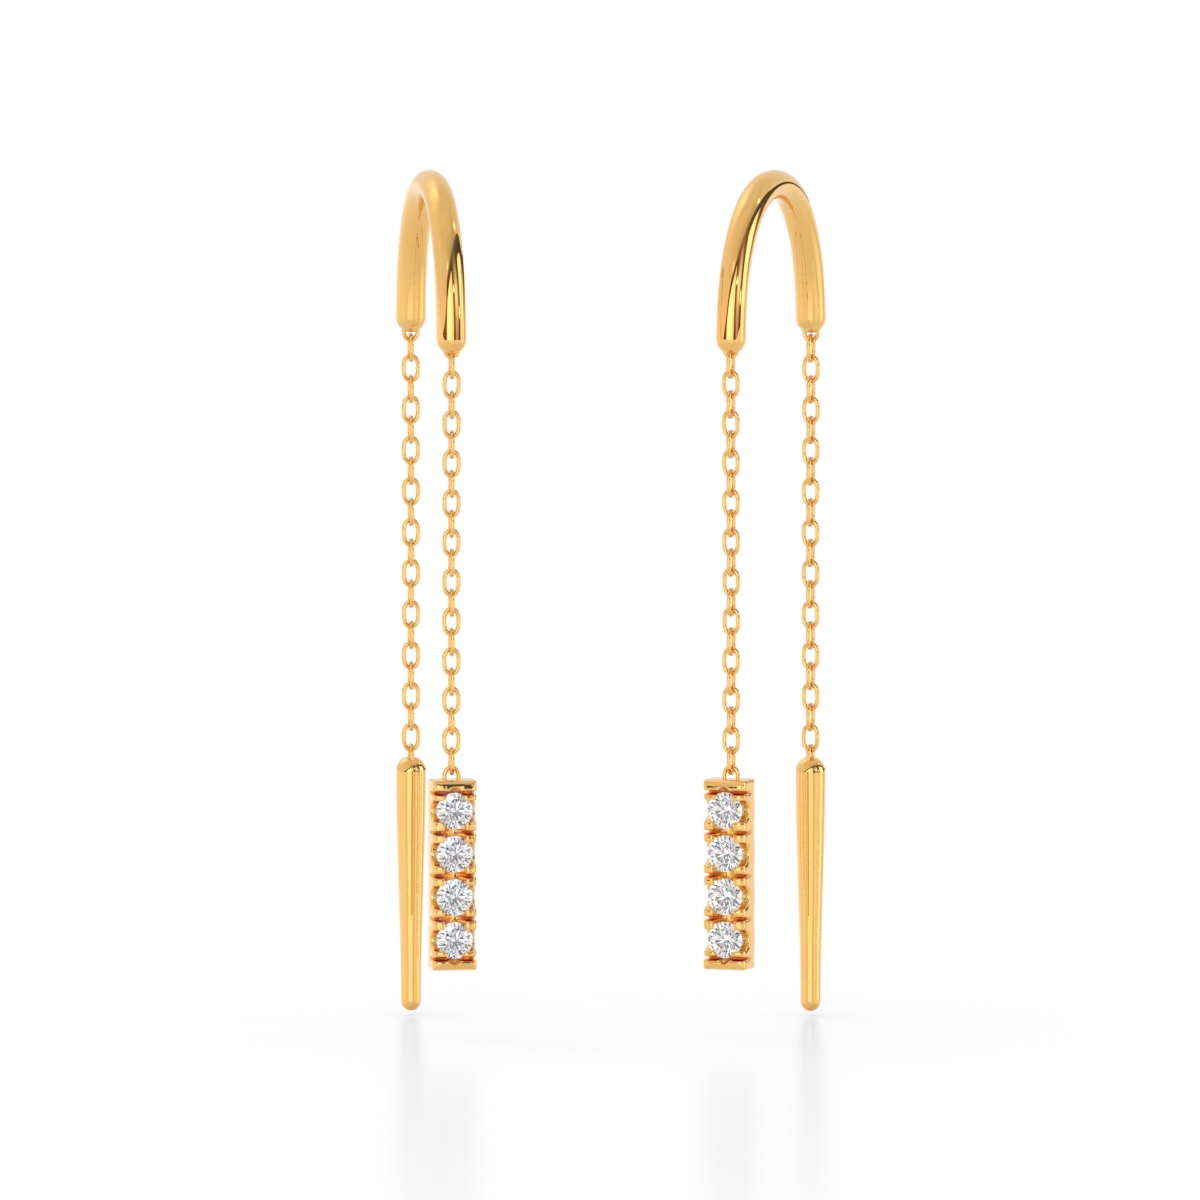 Stylish Sui Dhaga Earrings for Diwali || Cuddle Gold  diamond Sui Dhaga Earrings ||